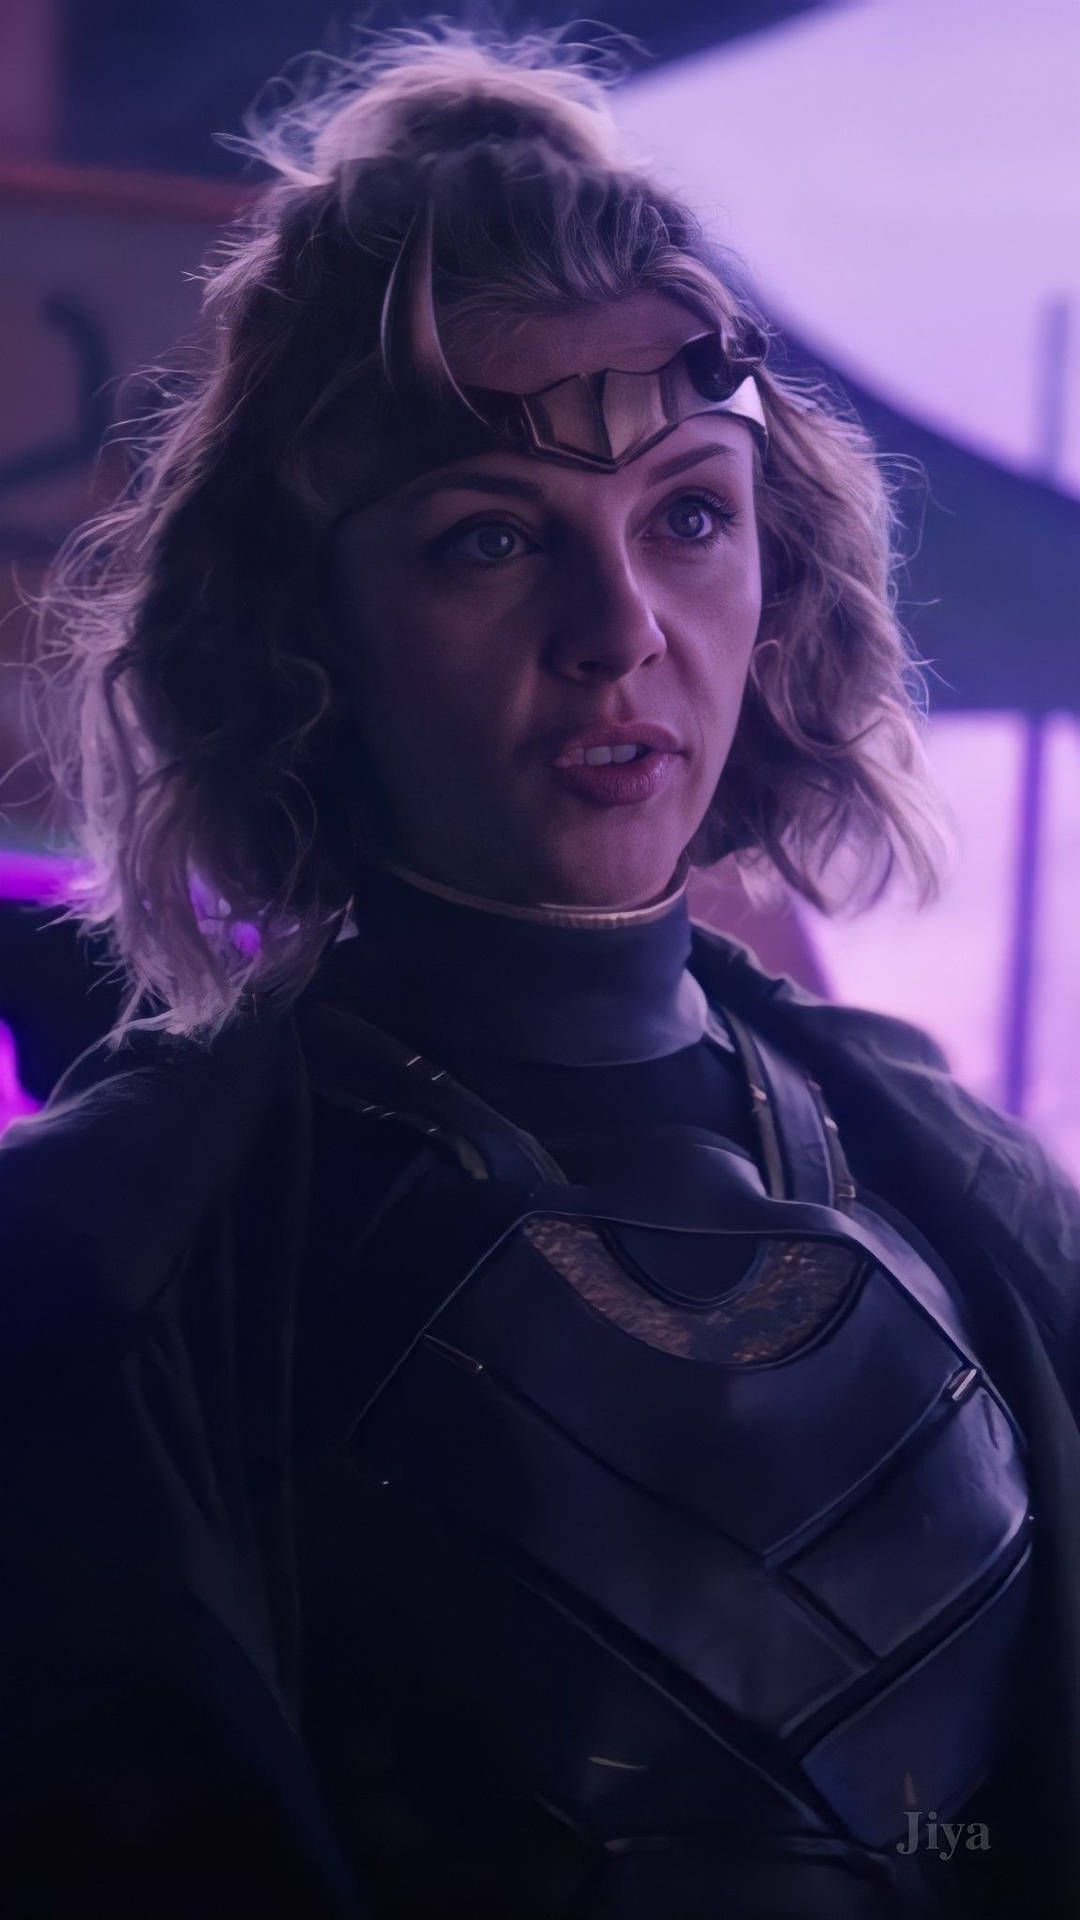 A woman in black armor with purple lighting - Loki